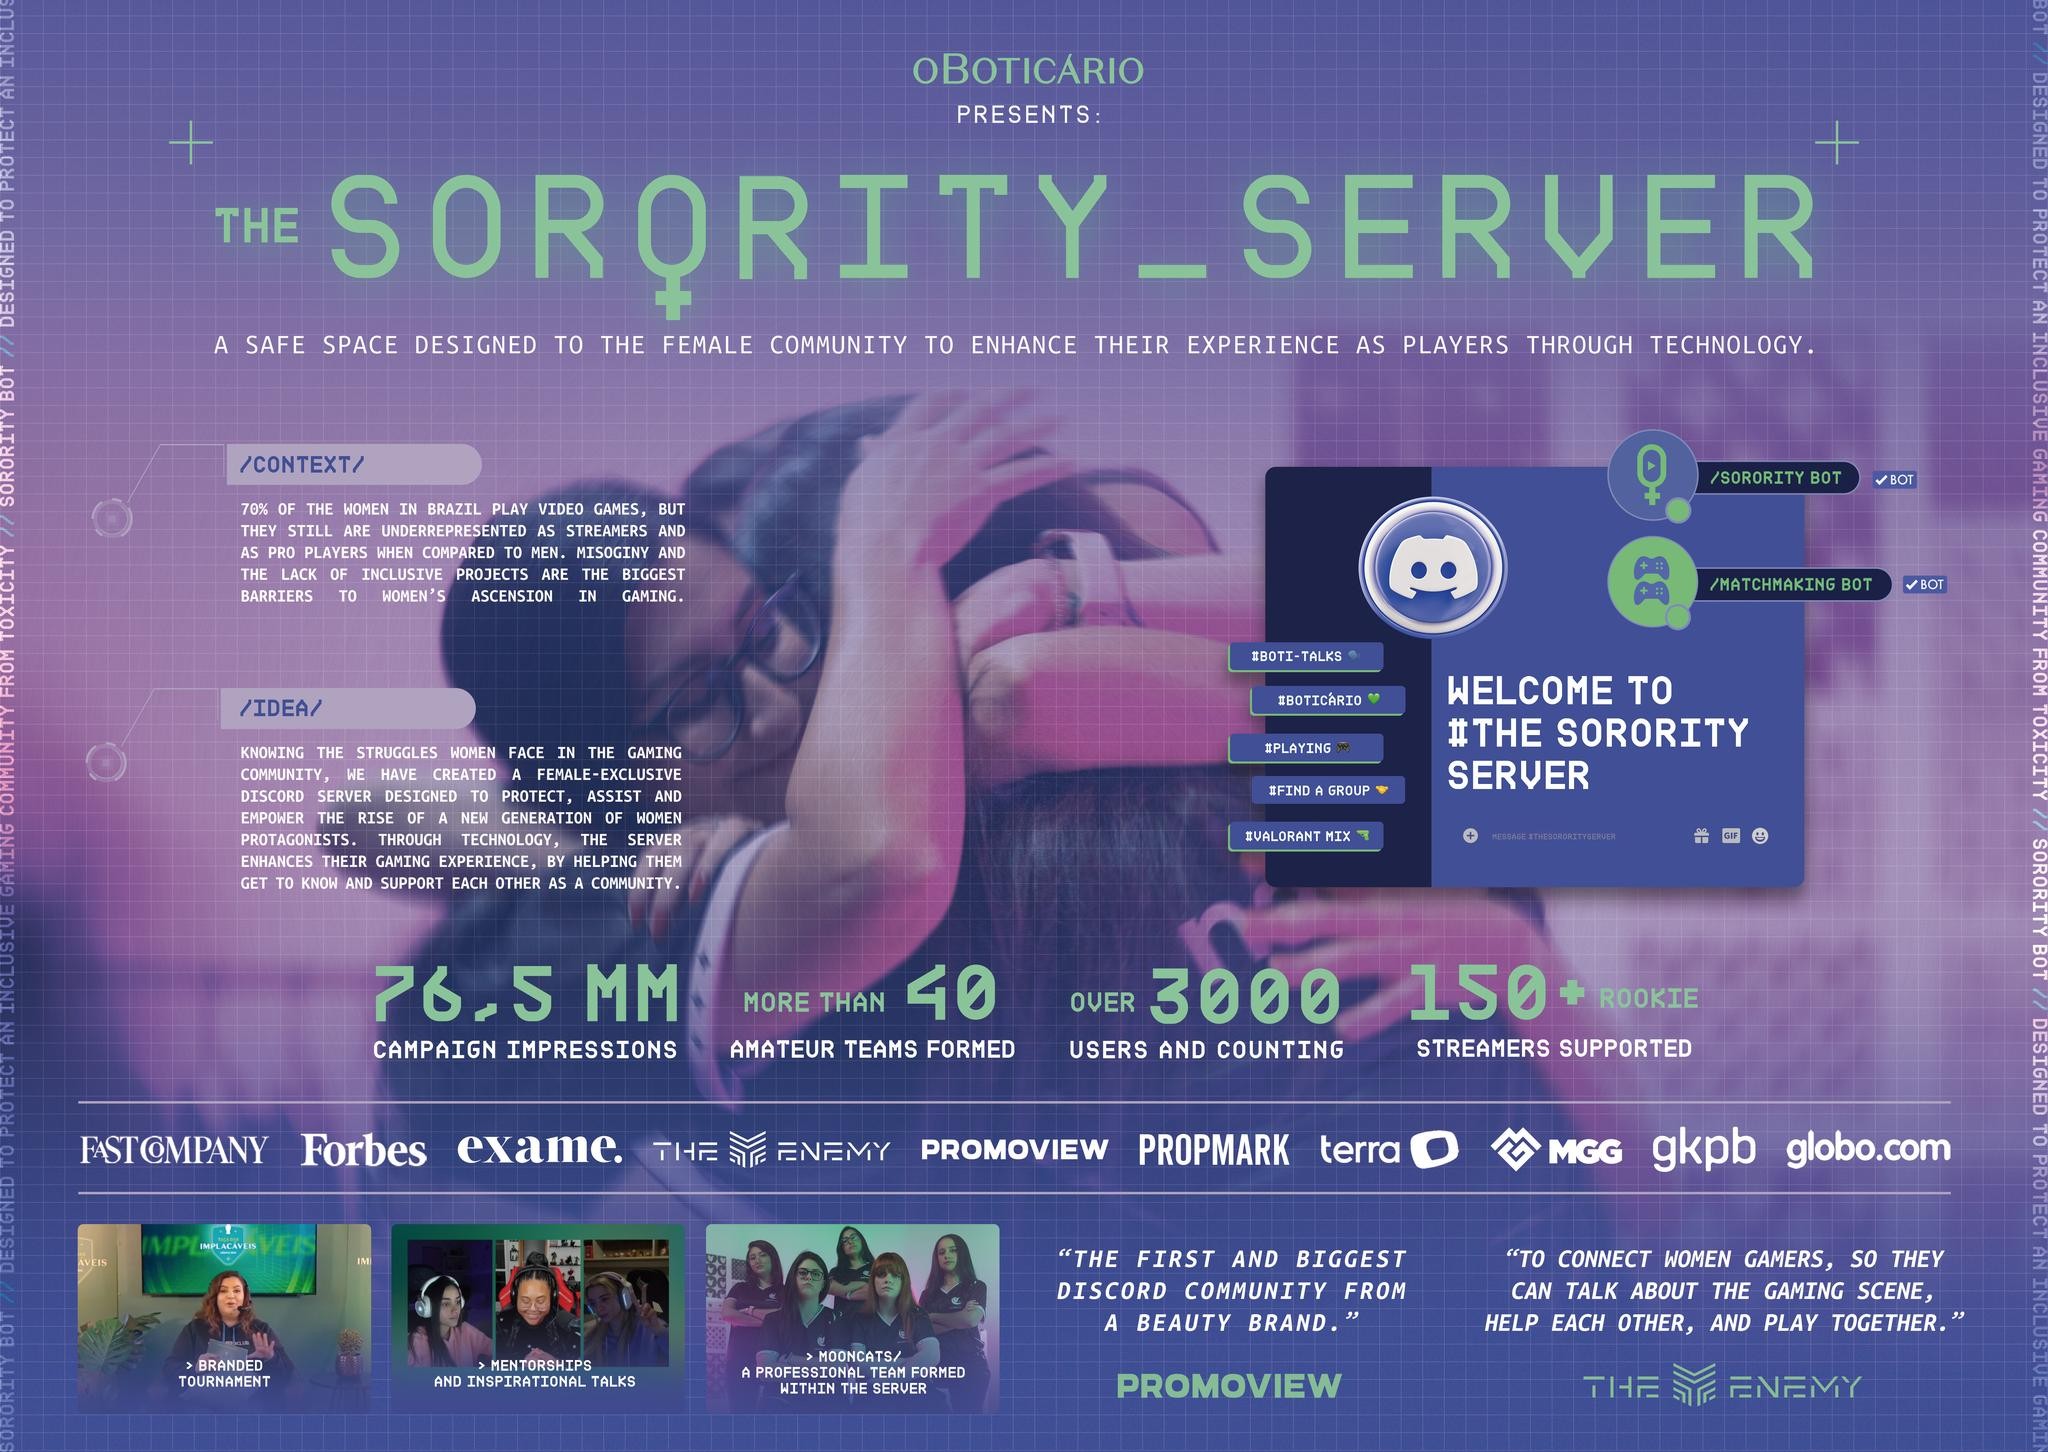 The Sorority Server